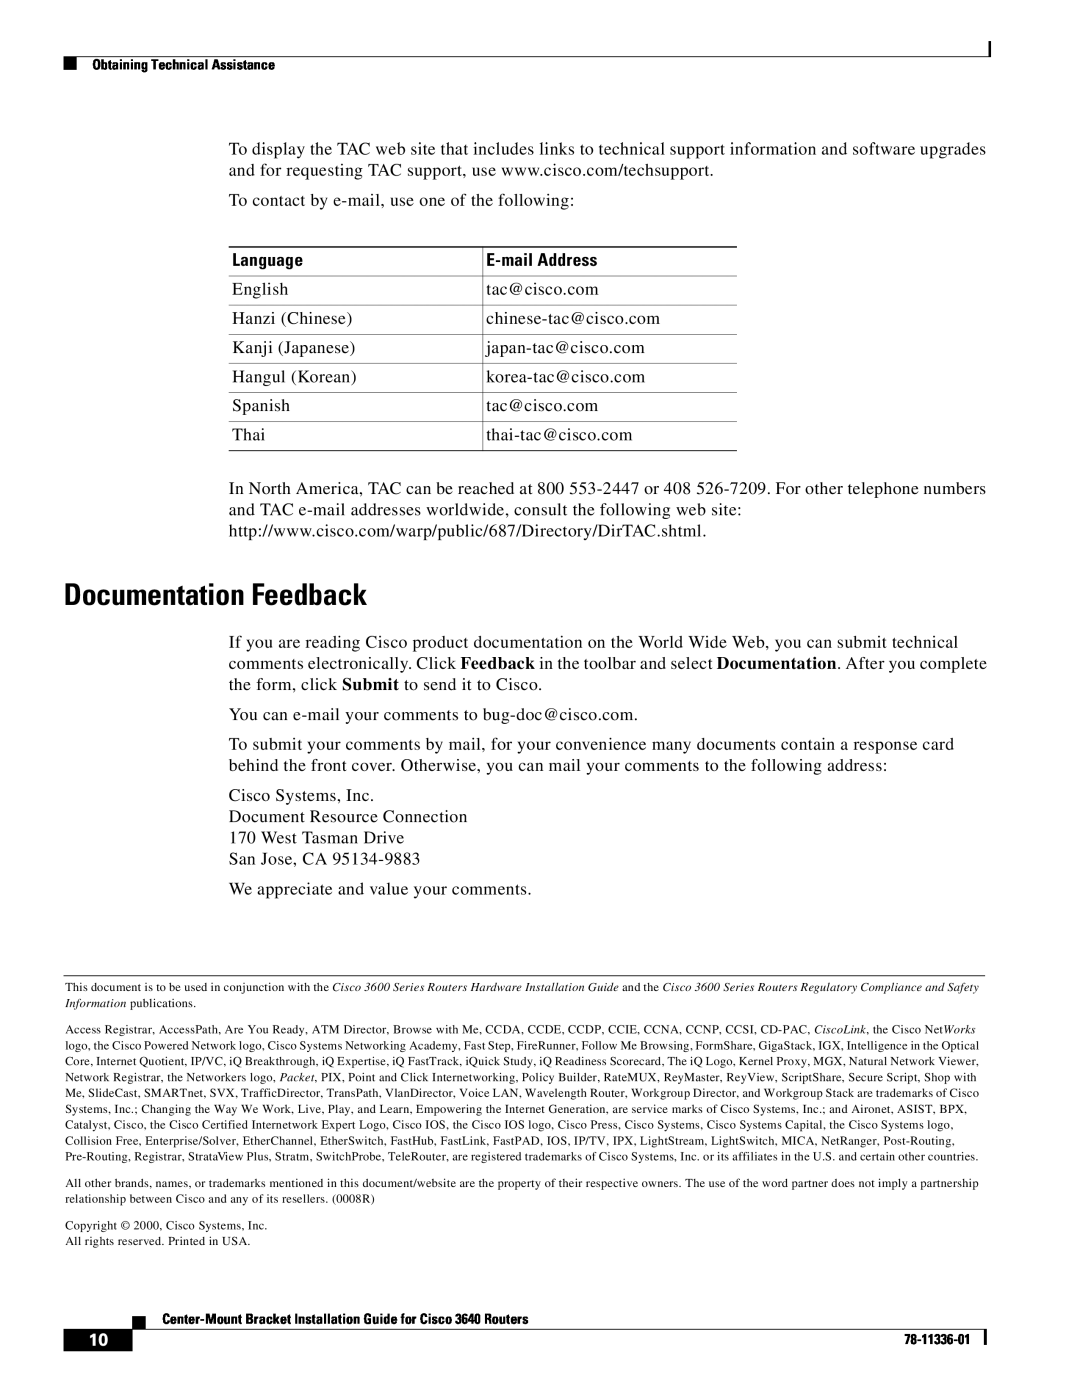 Cisco Systems 3640 manual Documentation Feedback, Language, E-mail Address 